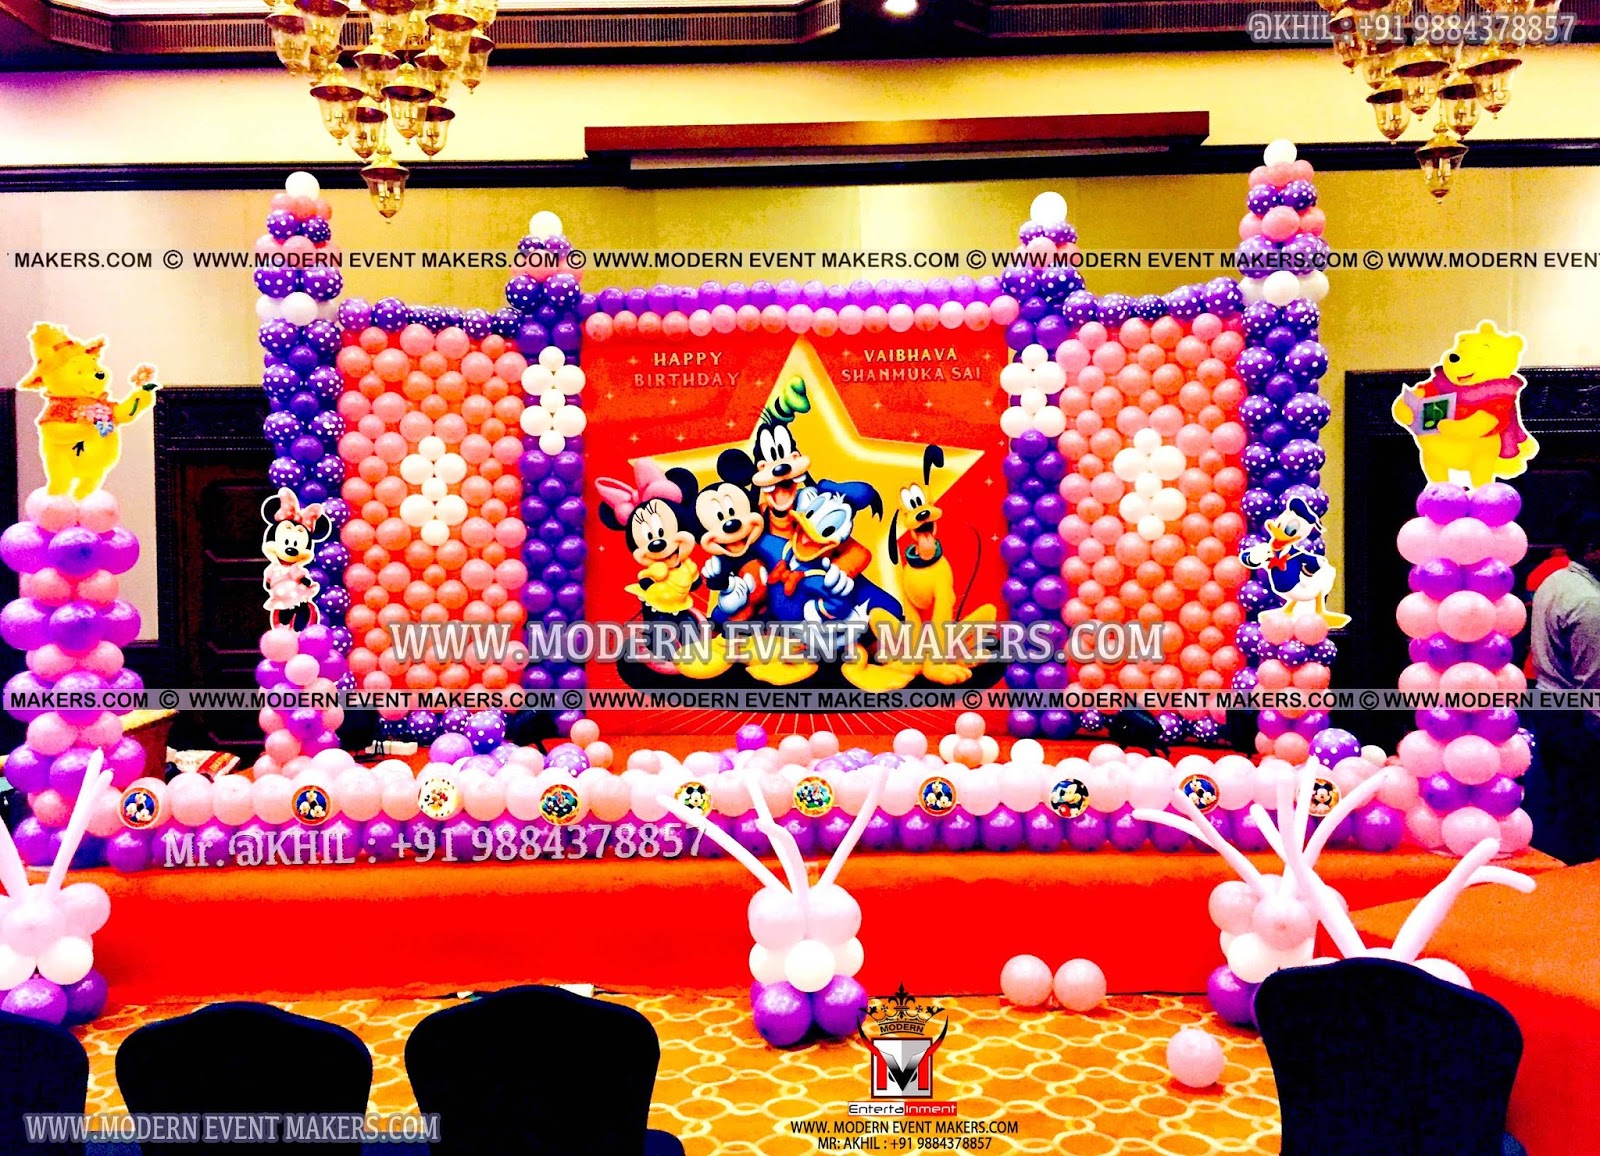 Theme Birthday  Party  Organisers in Chennai  9884378857